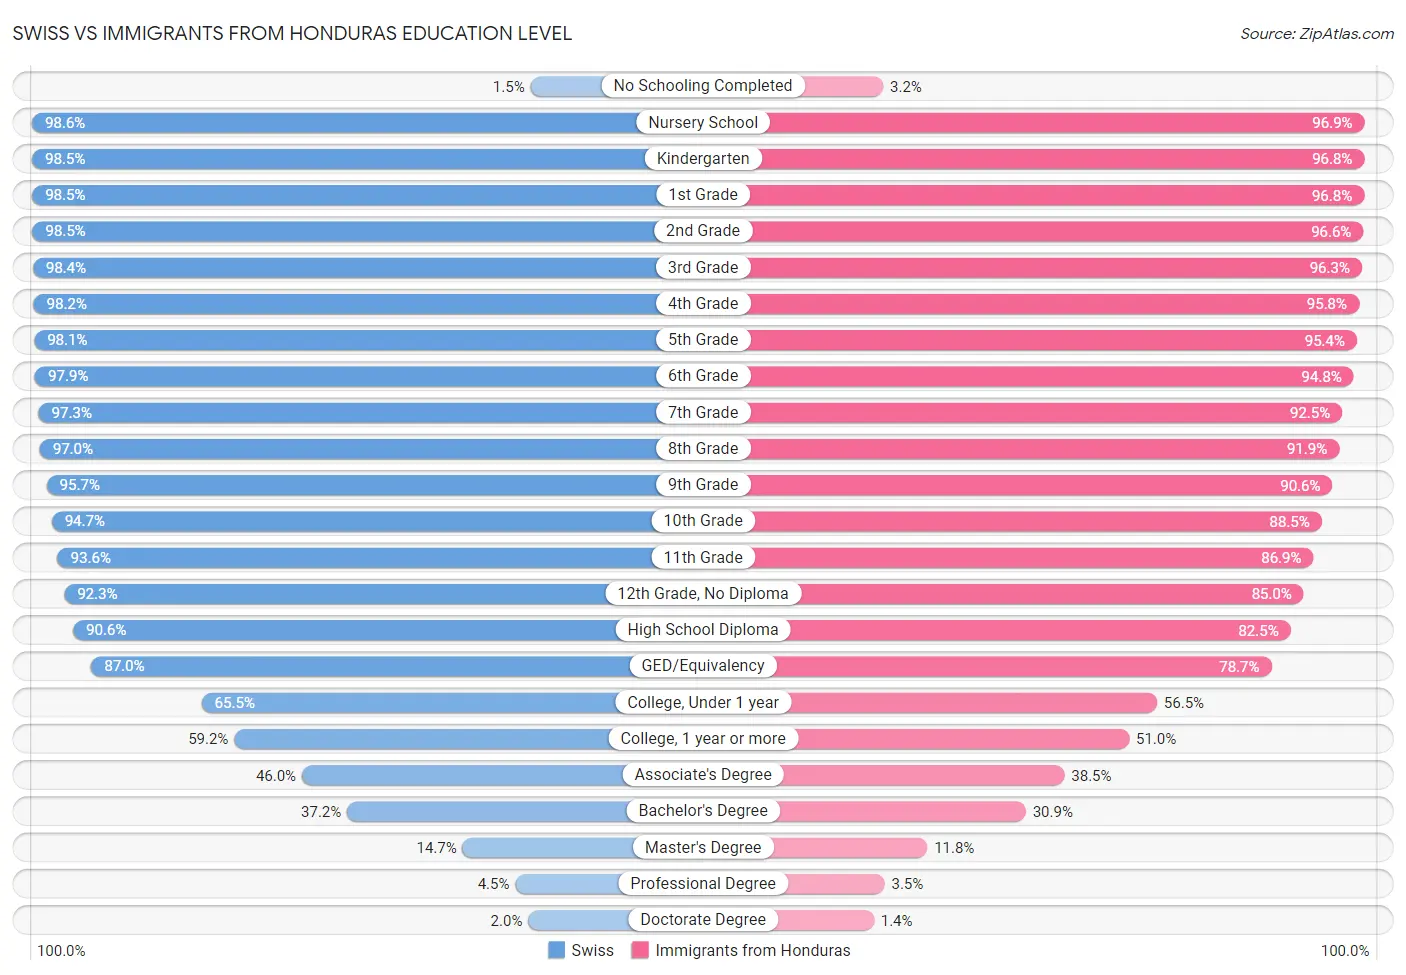 Swiss vs Immigrants from Honduras Education Level